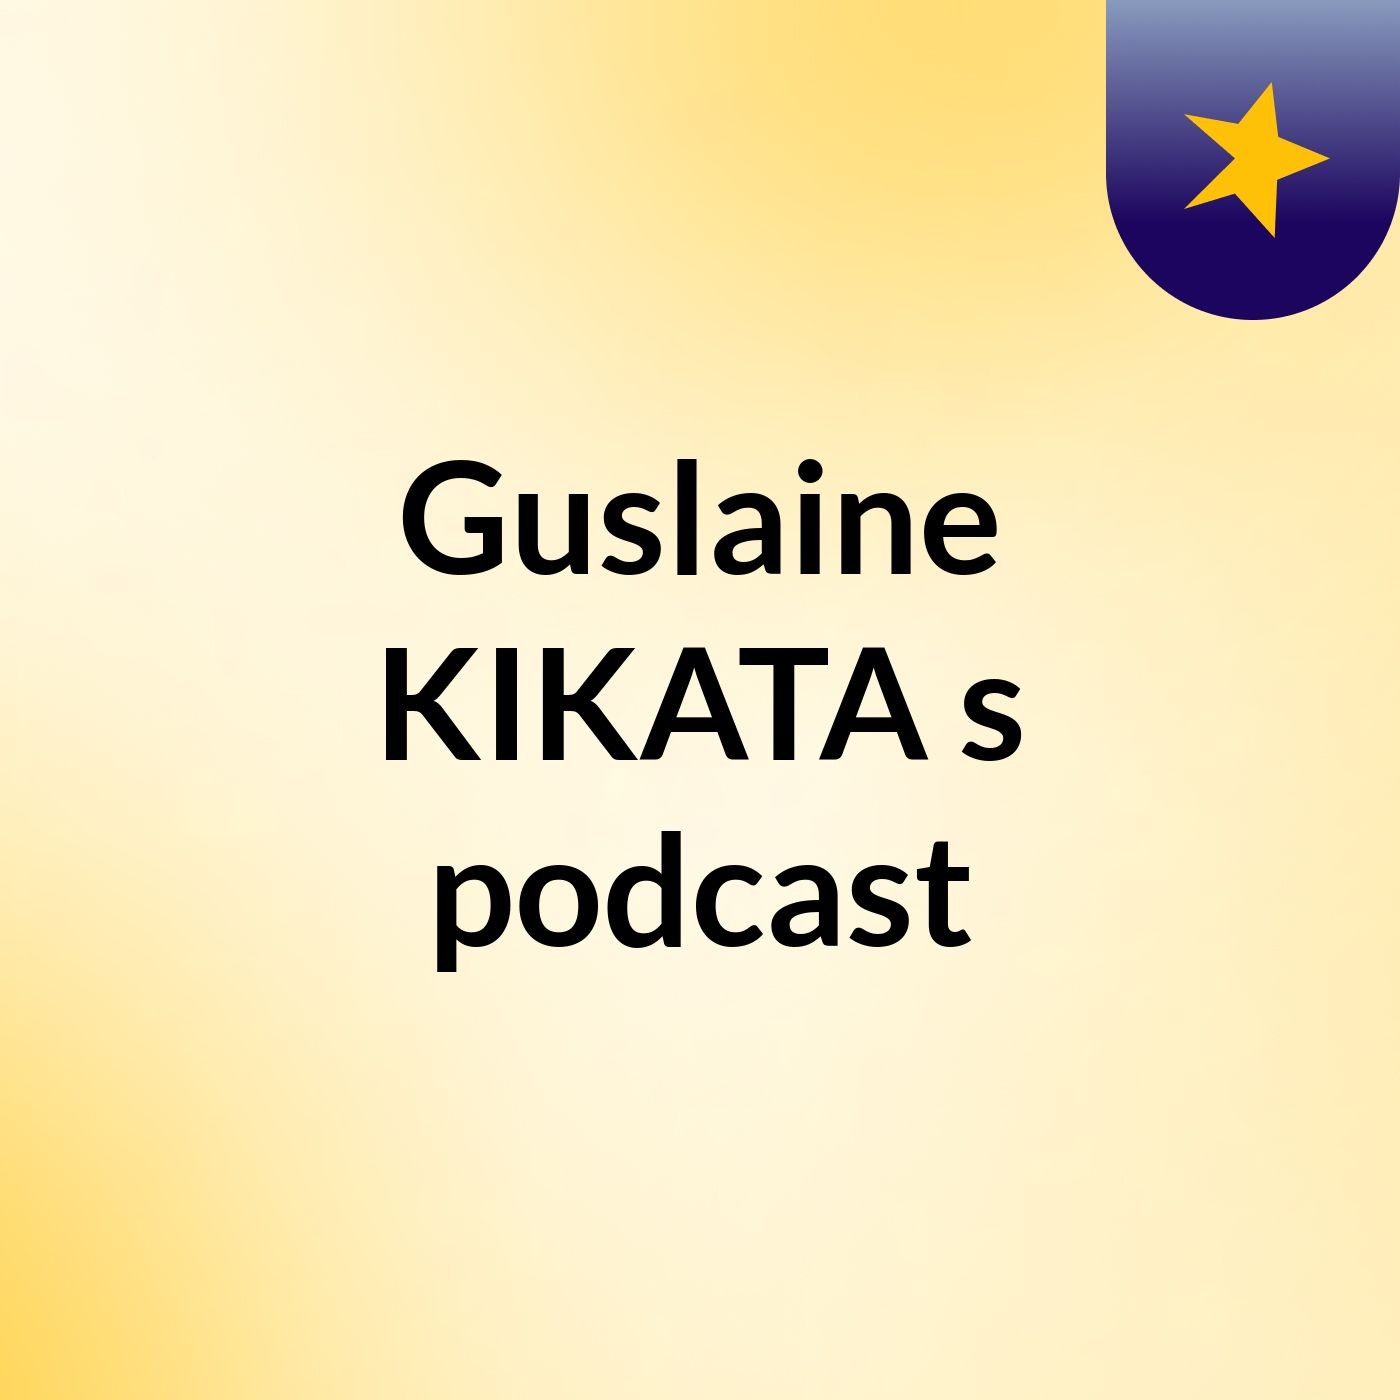 Guslaine KIKATA's podcast